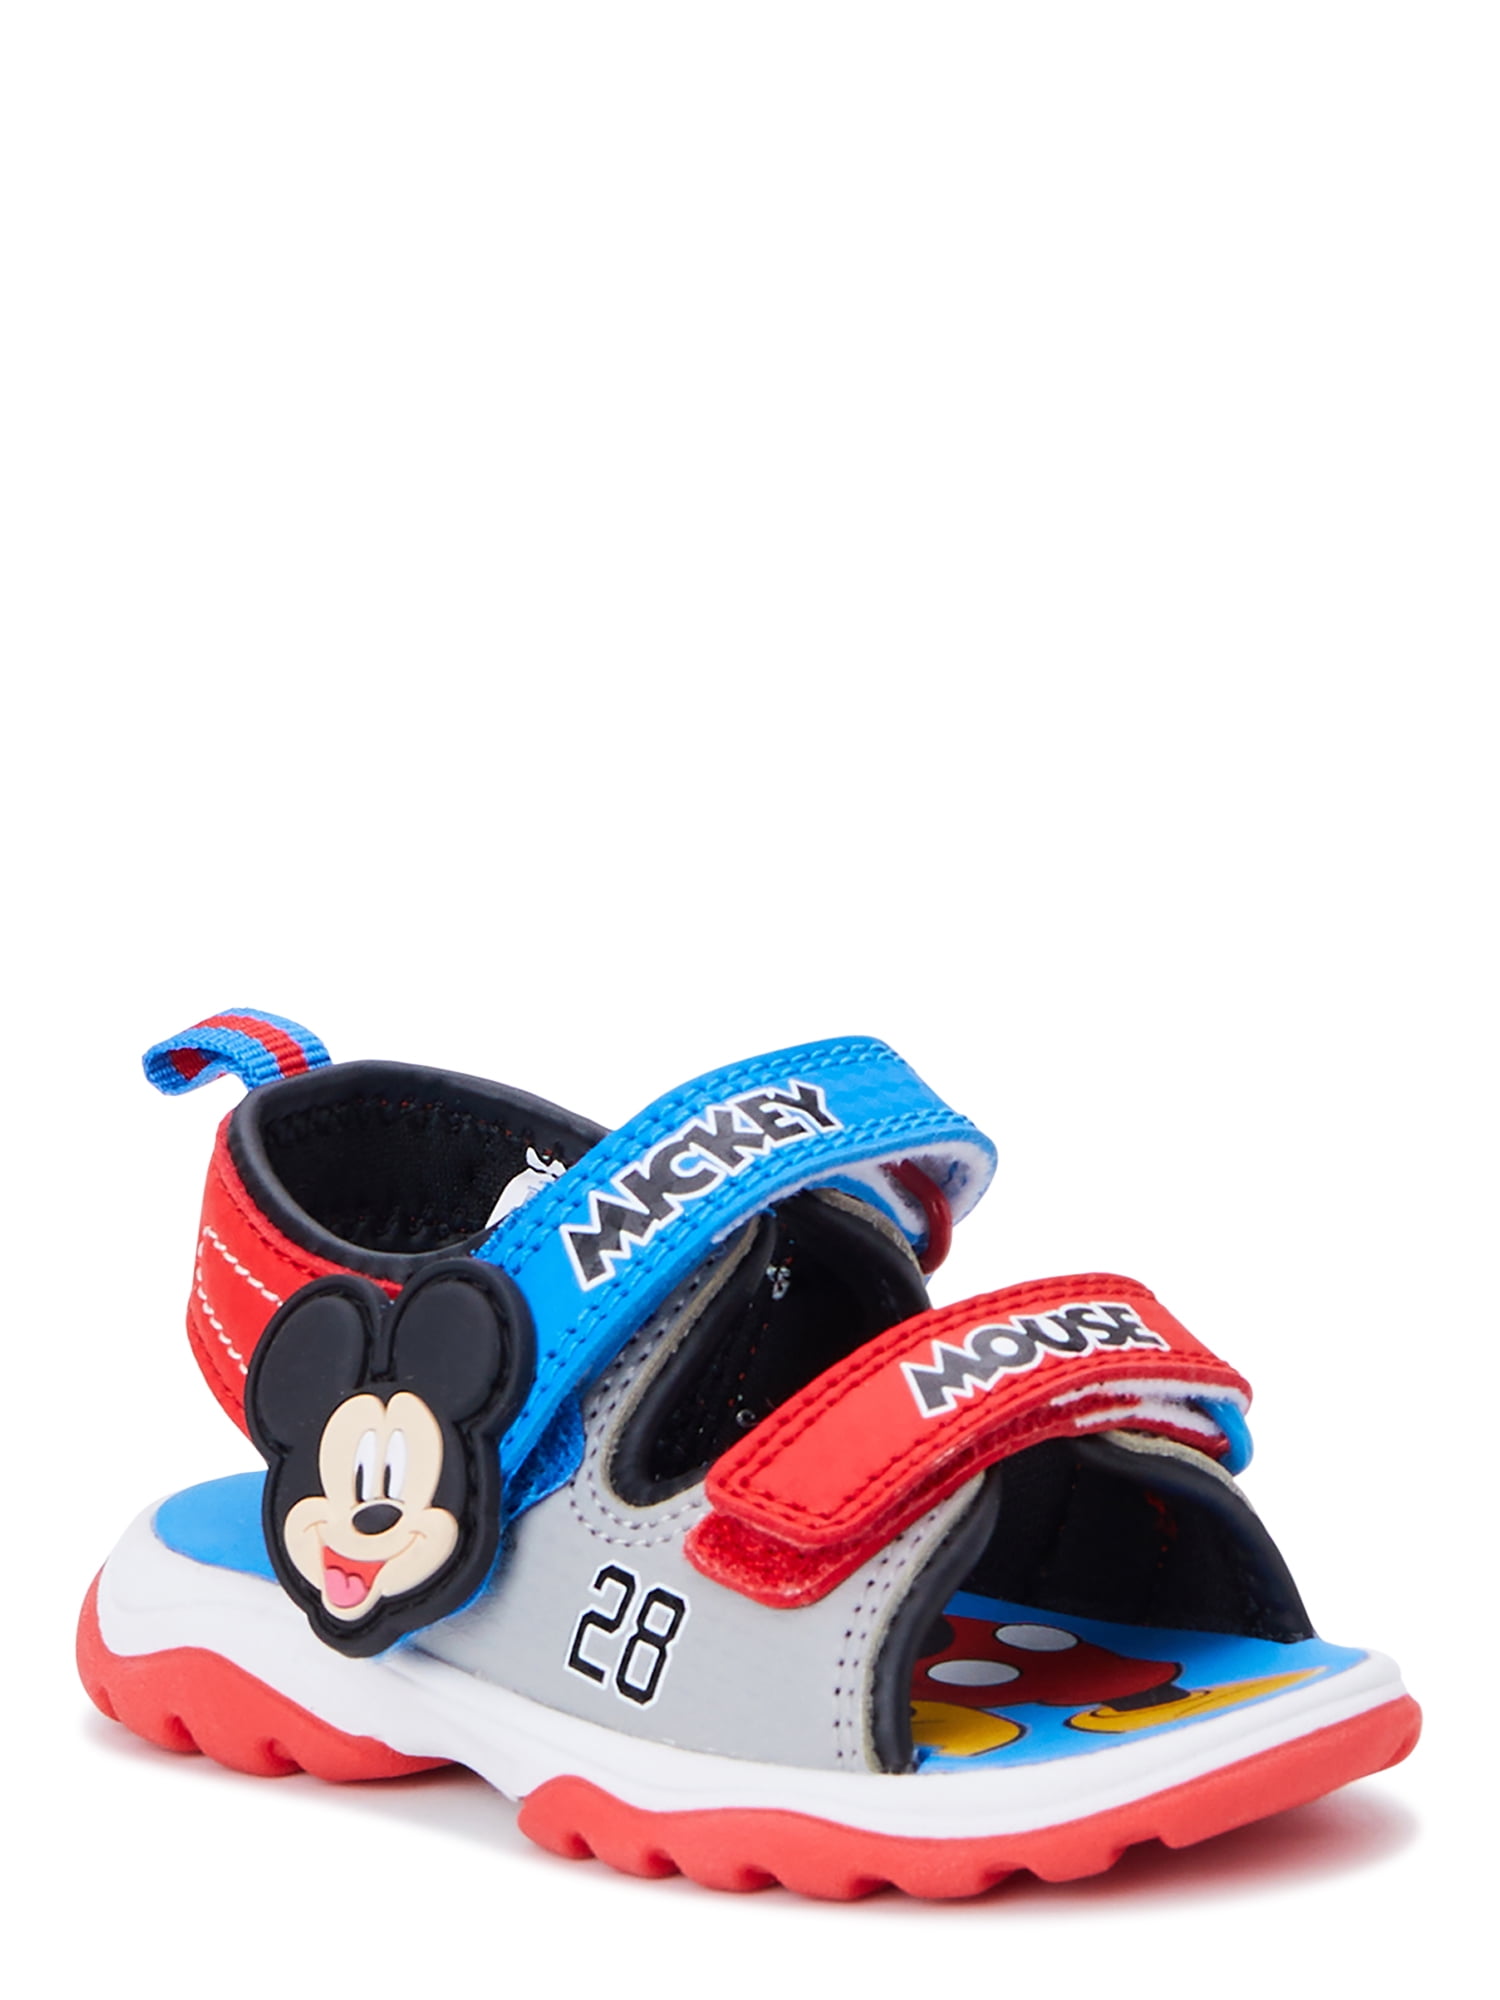 Qoo10 - [DISNEY] Made in Korea Disney Mickey Mouse Womens Fashion Sandal /  fli... : Shoes